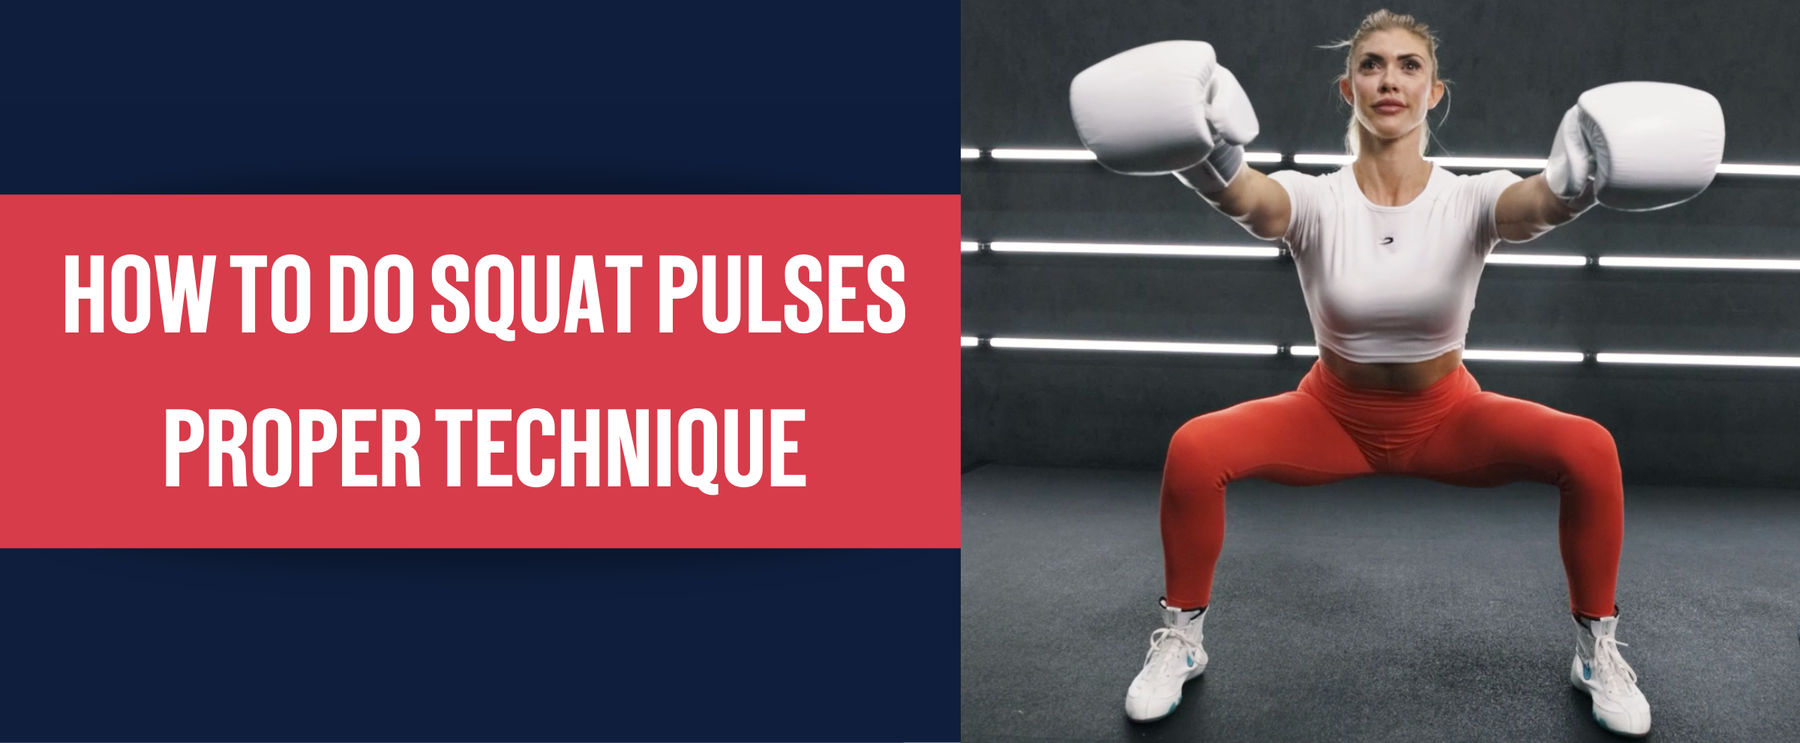 FightCamp - How To Do Squat Pulses - Proper Technique